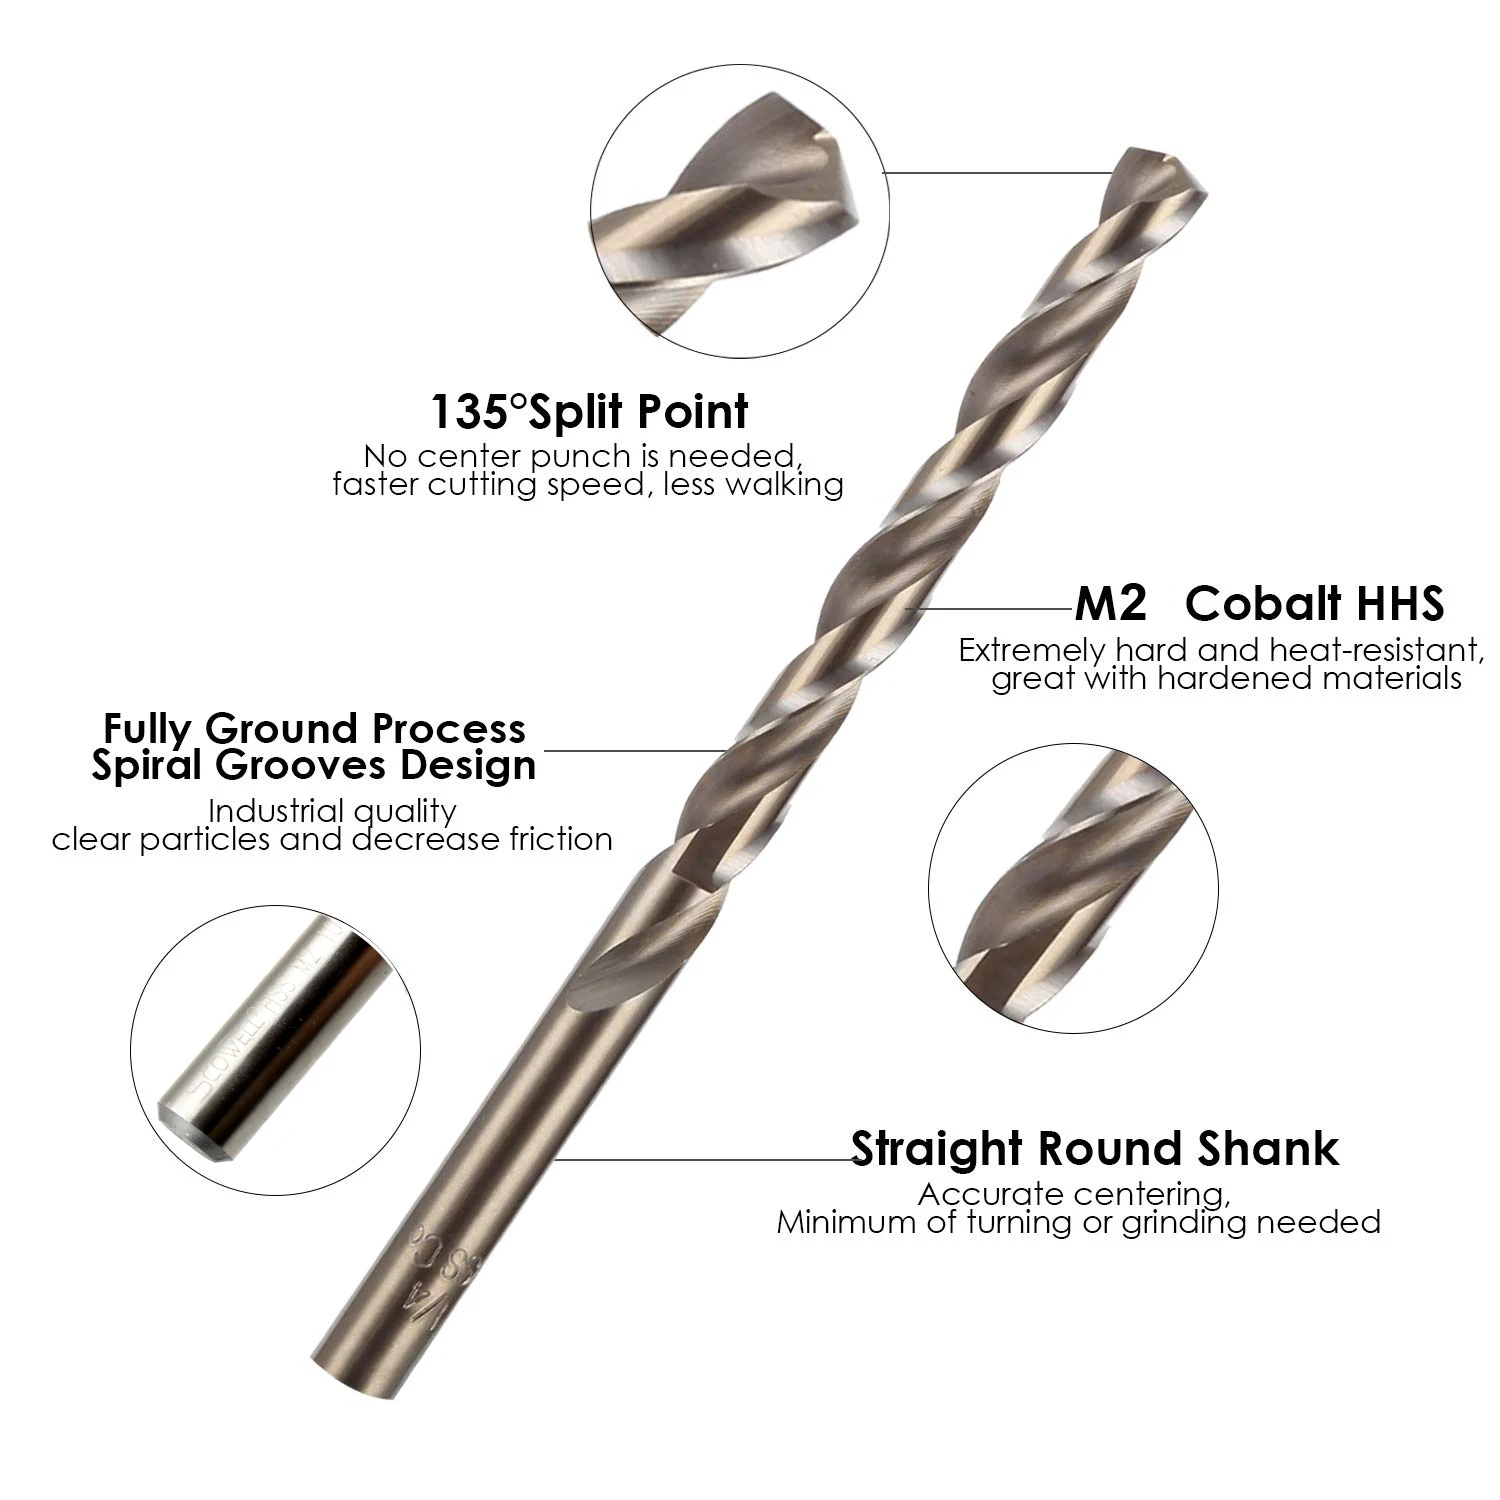 1x 4.2mm HSS M2 Twist Drill Bit For Iron Aluminum Stainless Steel Metal Cutting